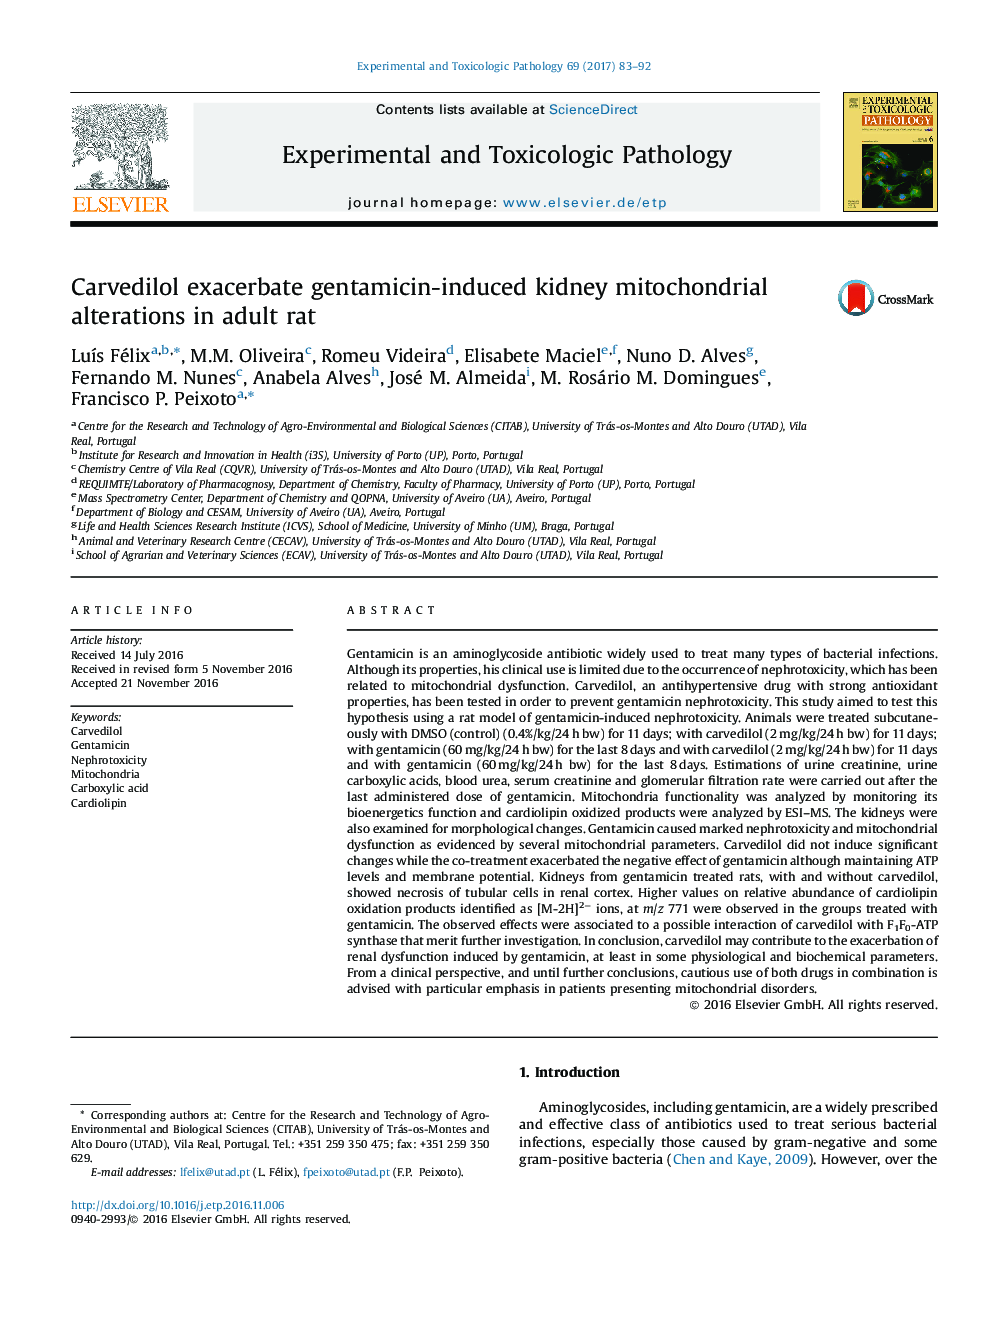 Carvedilol exacerbate gentamicin-induced kidney mitochondrial alterations in adult rat